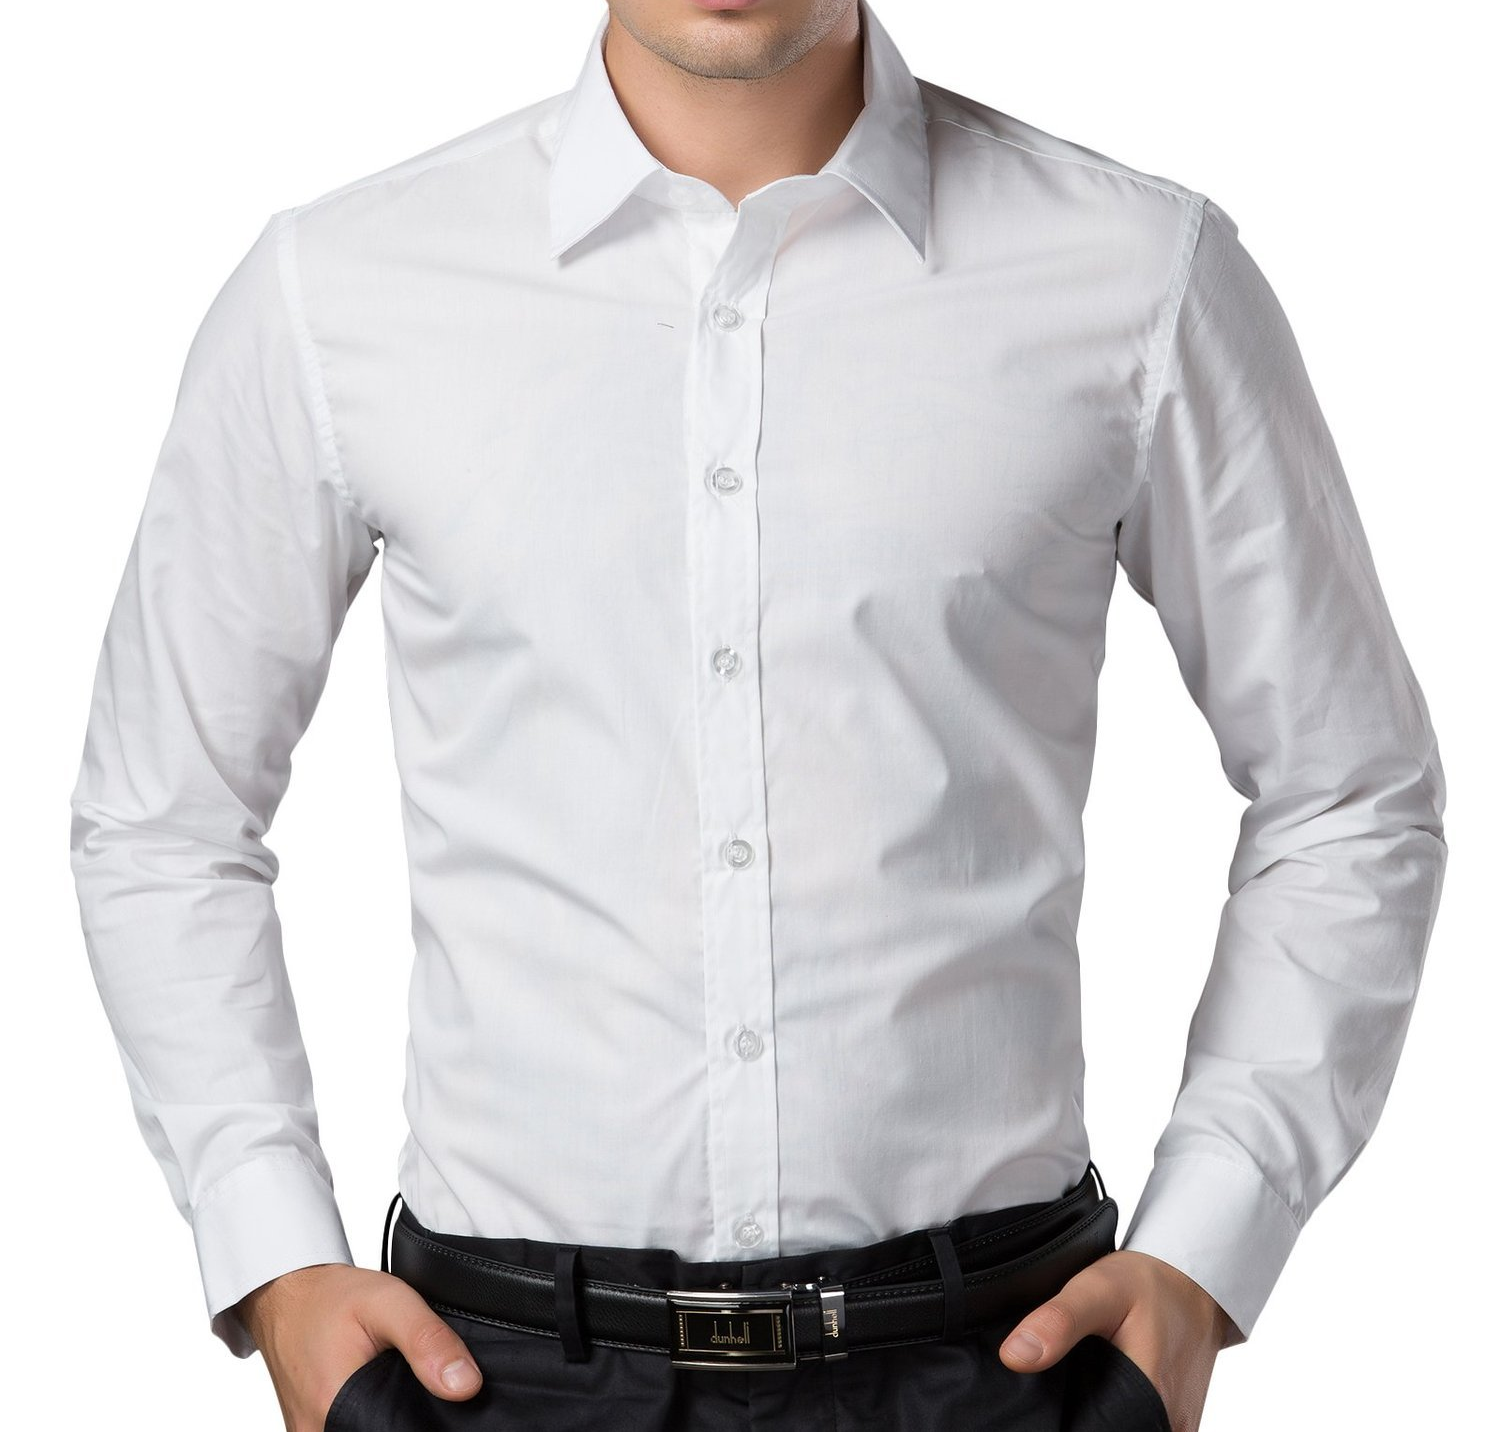 Vestige Uniform for Men and Ladies - VESTIGE SUPPORT : Products ...